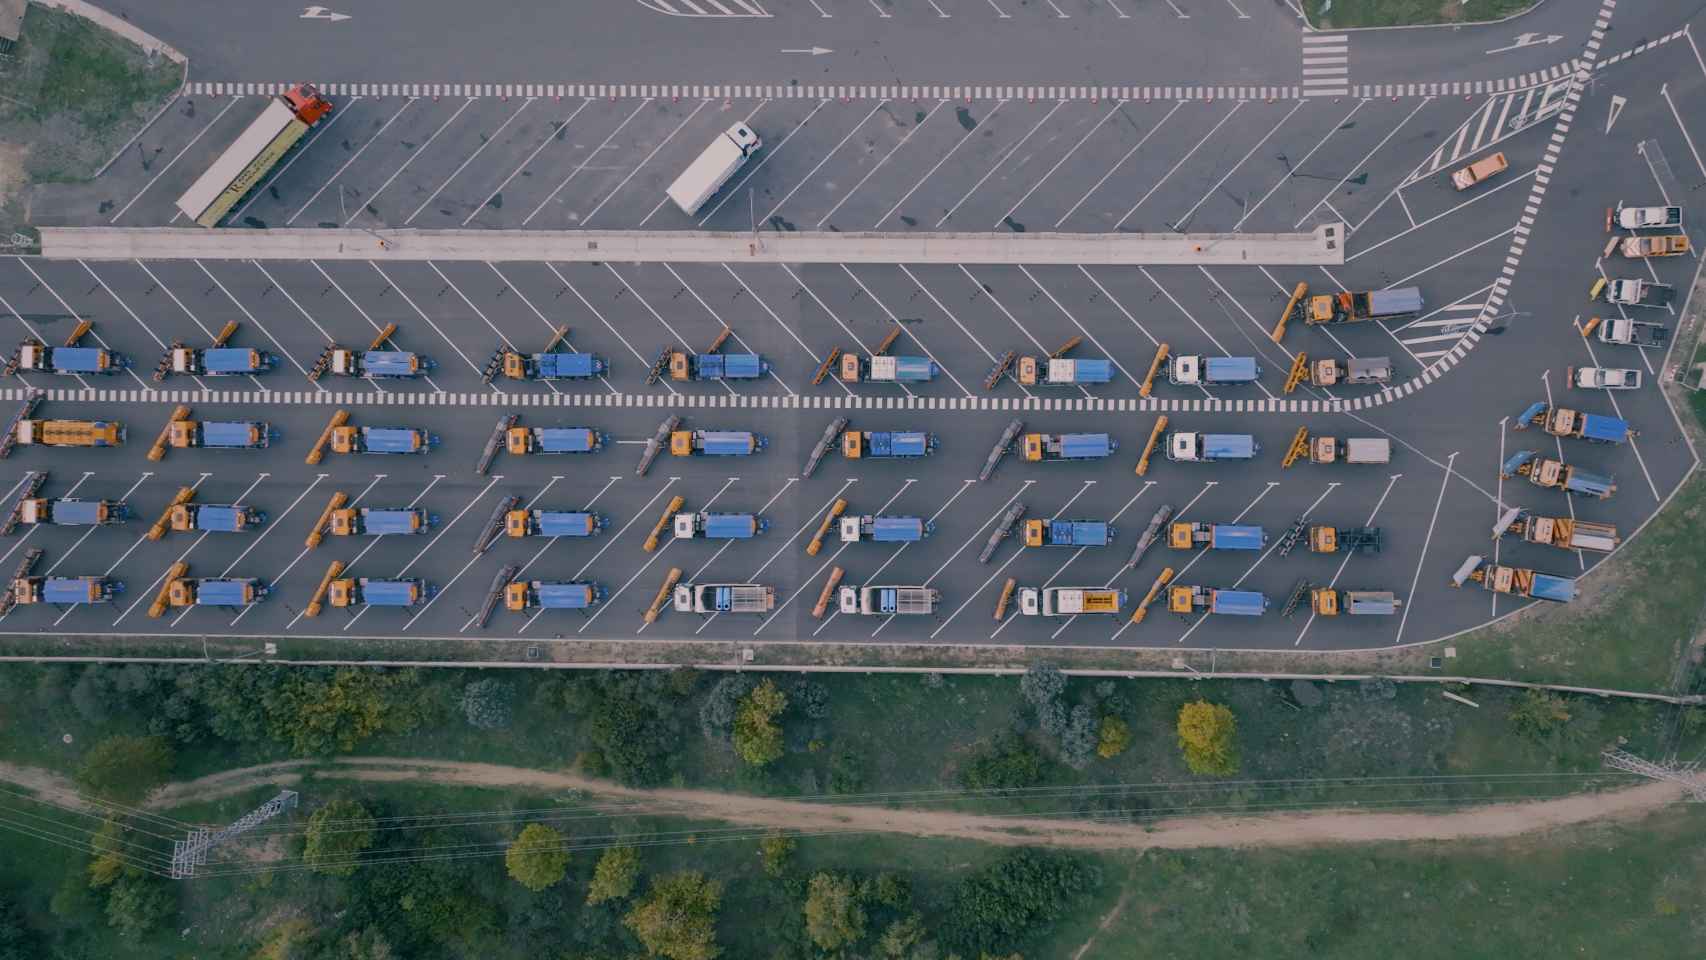 Imagen aérea de la flota de máquinas quitanieve de Autopistas.